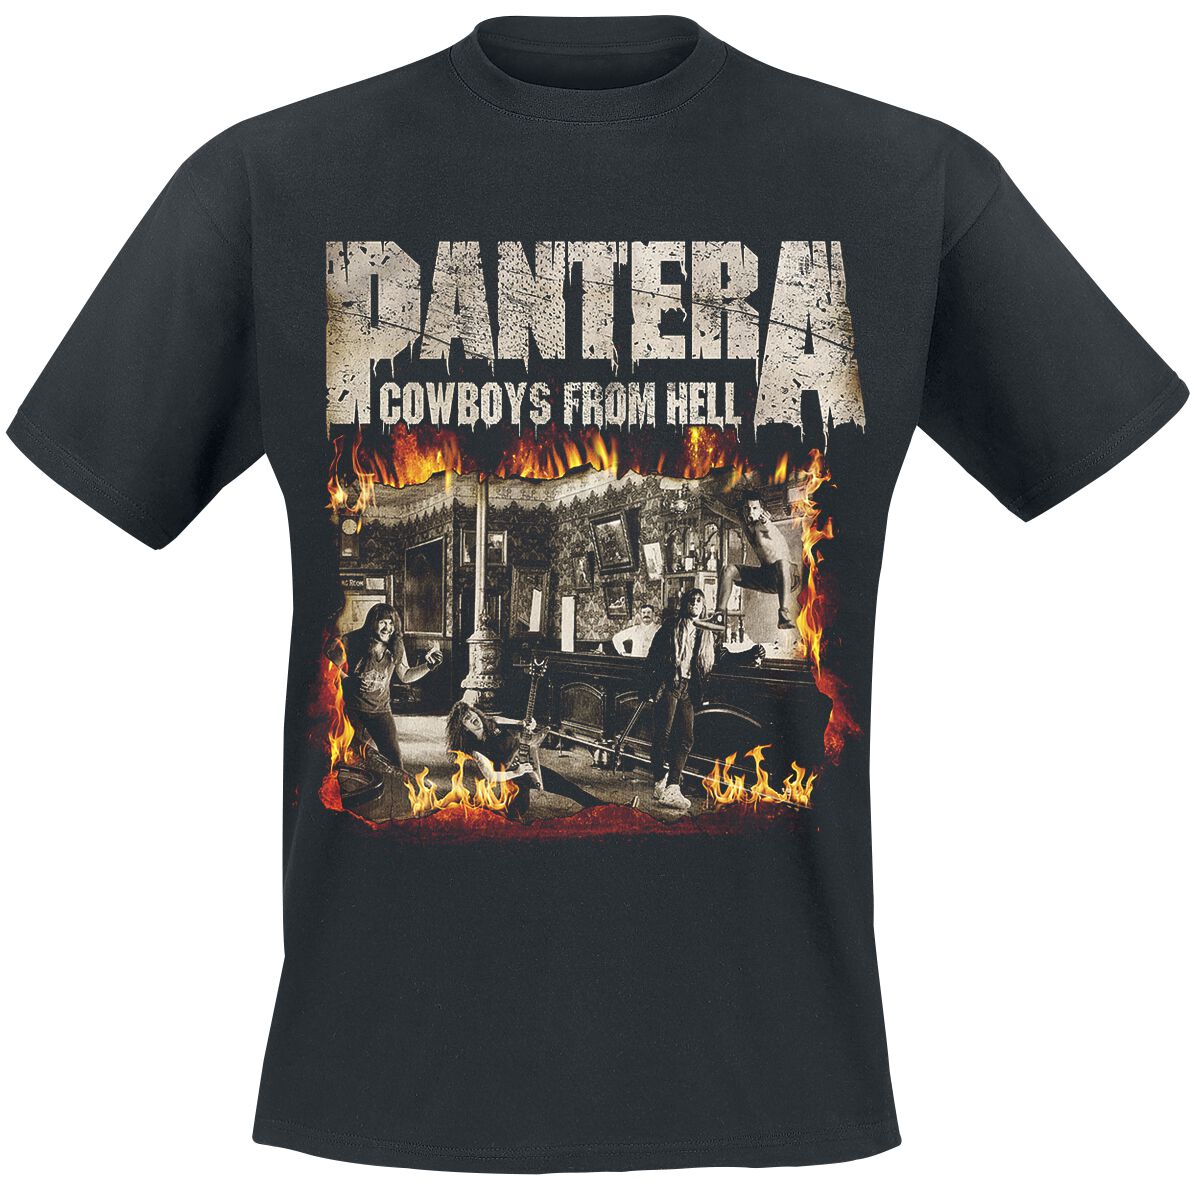 Pantera T-Shirt - Cowboys From Hell - Fire Frame - S bis XXL - für Männer - Größe XL - schwarz  - Lizenziertes Merchandise!